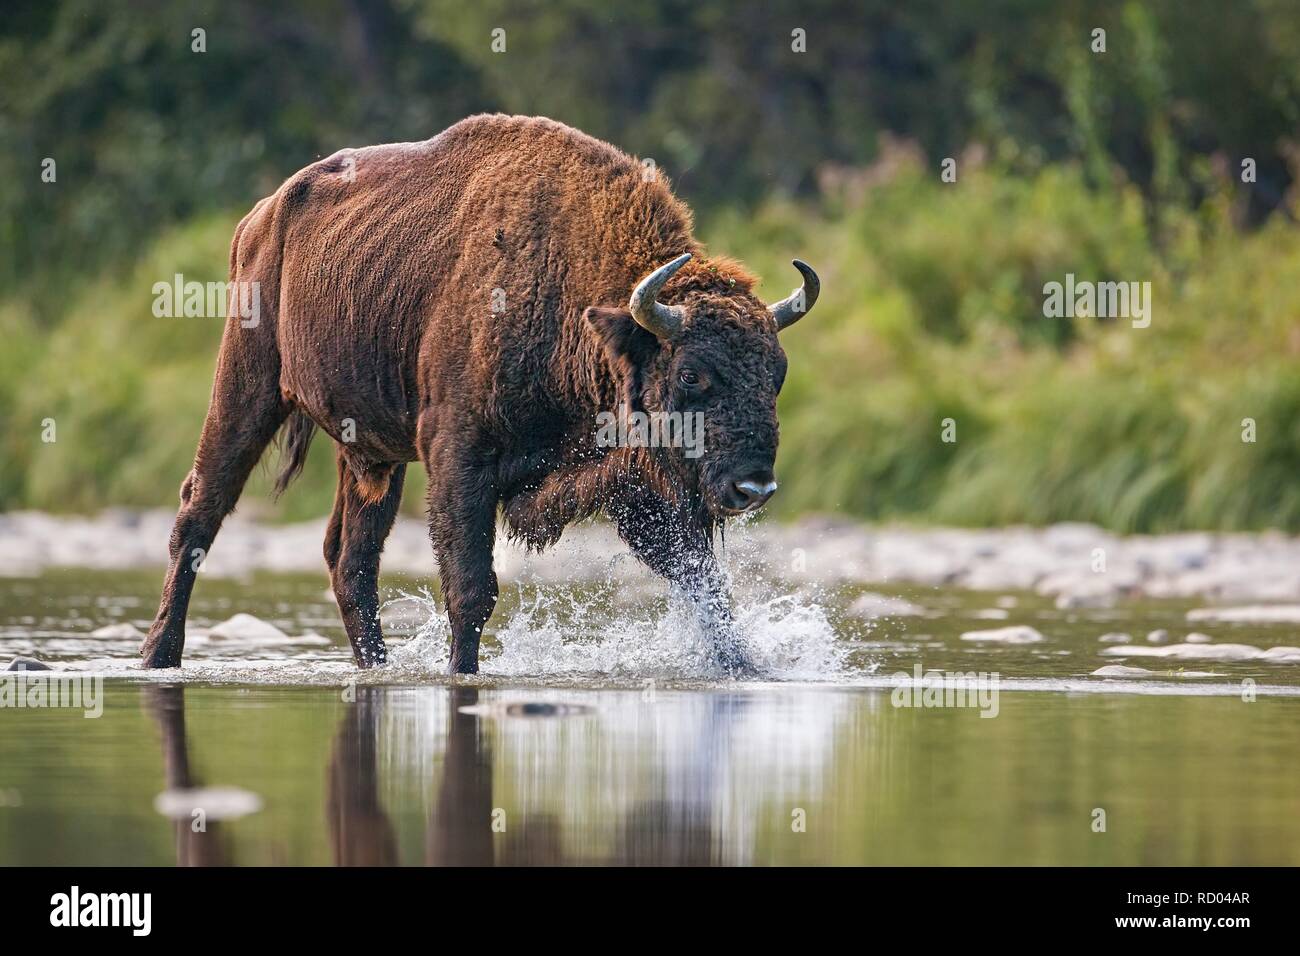 Huge bull of european bison, bison bonasus, crossing a river. Majestic wild animal splashing water with droplets flying around. Dynamic wildlife scene Stock Photo